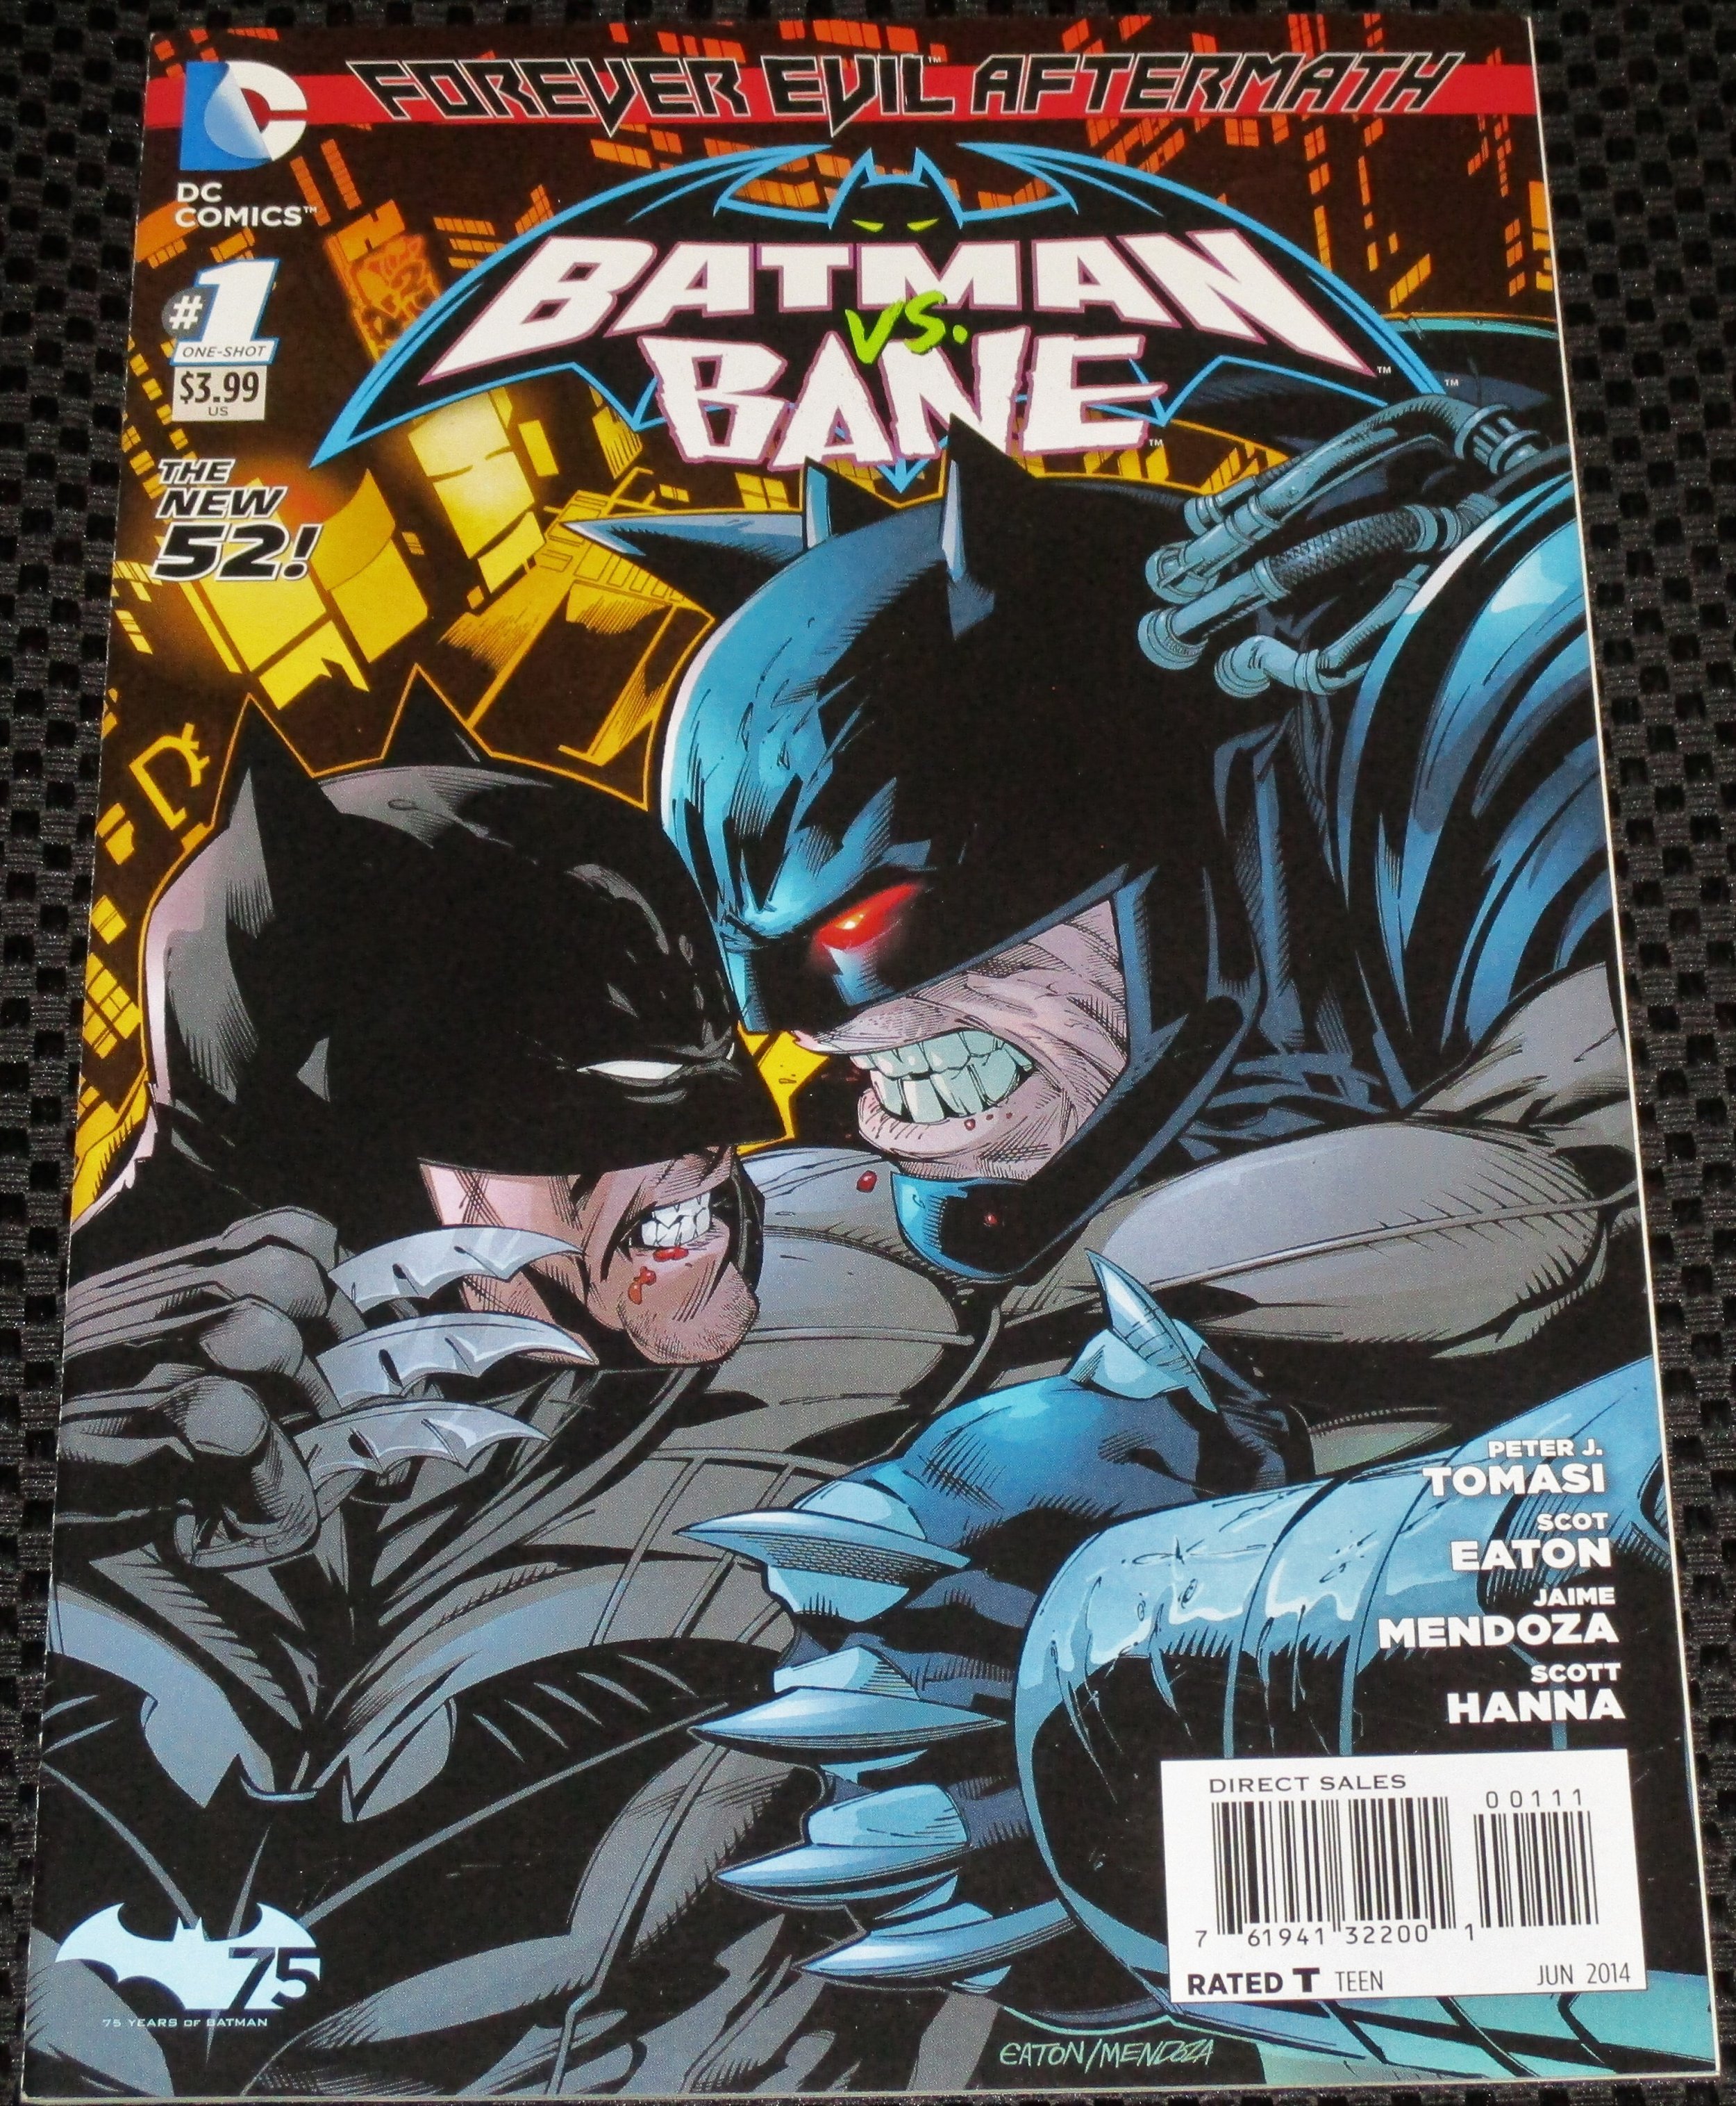 Forever Evil Aftermath: Batman vs. Bane #1 (2014) | Comic Books - Modern  Age, DC Comics, Batman, Superhero / HipComic